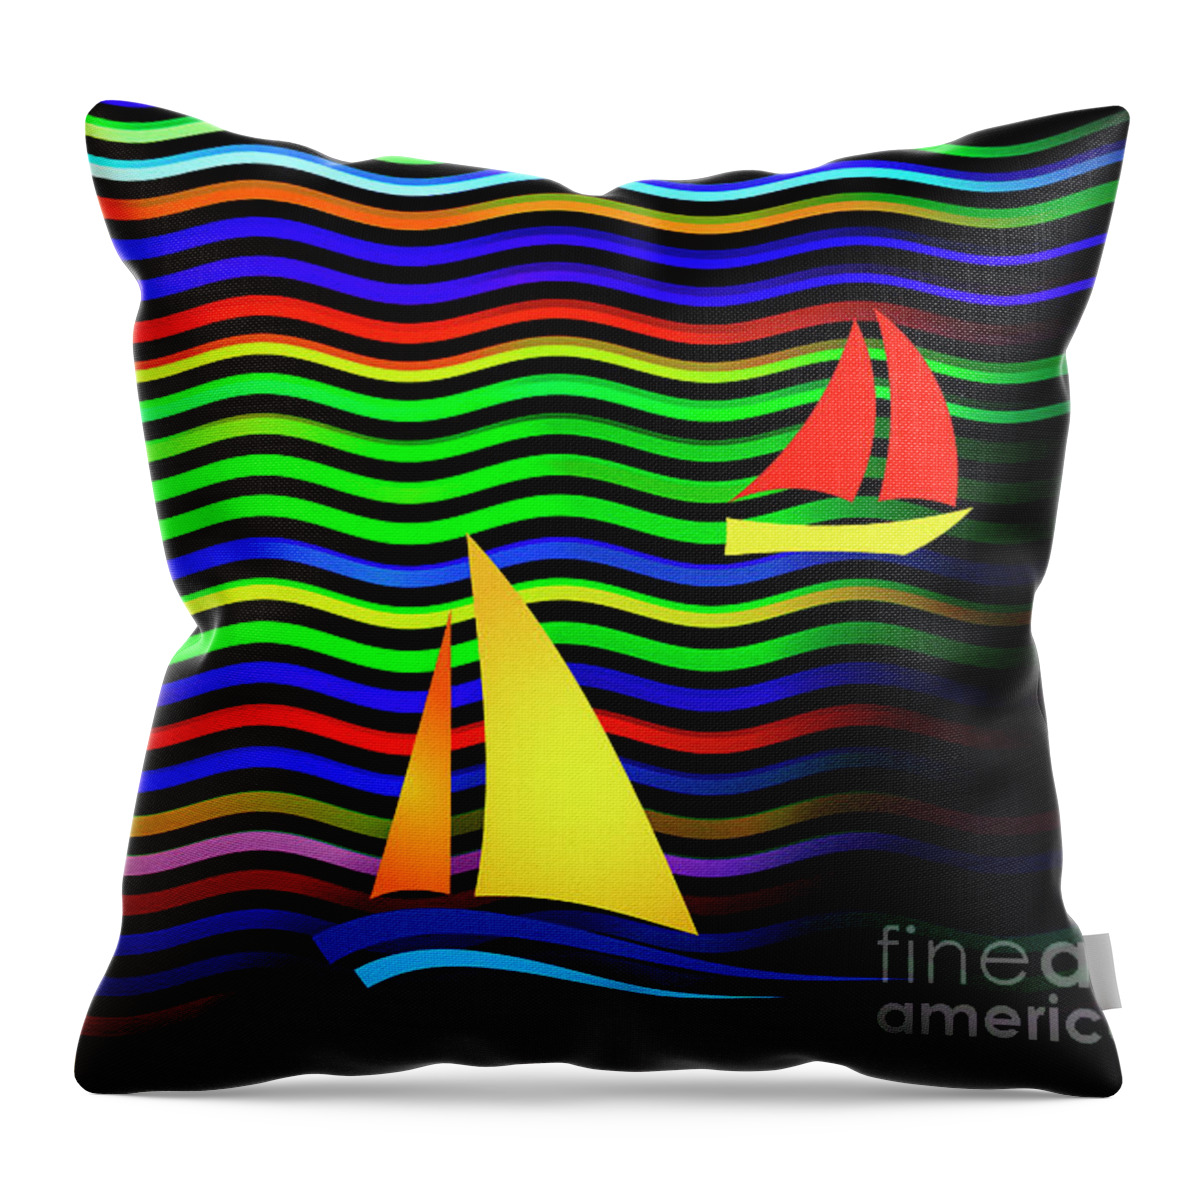 Nag006101 Throw Pillow featuring the digital art Sail The Ocean 03 by Edmund Nagele FRPS